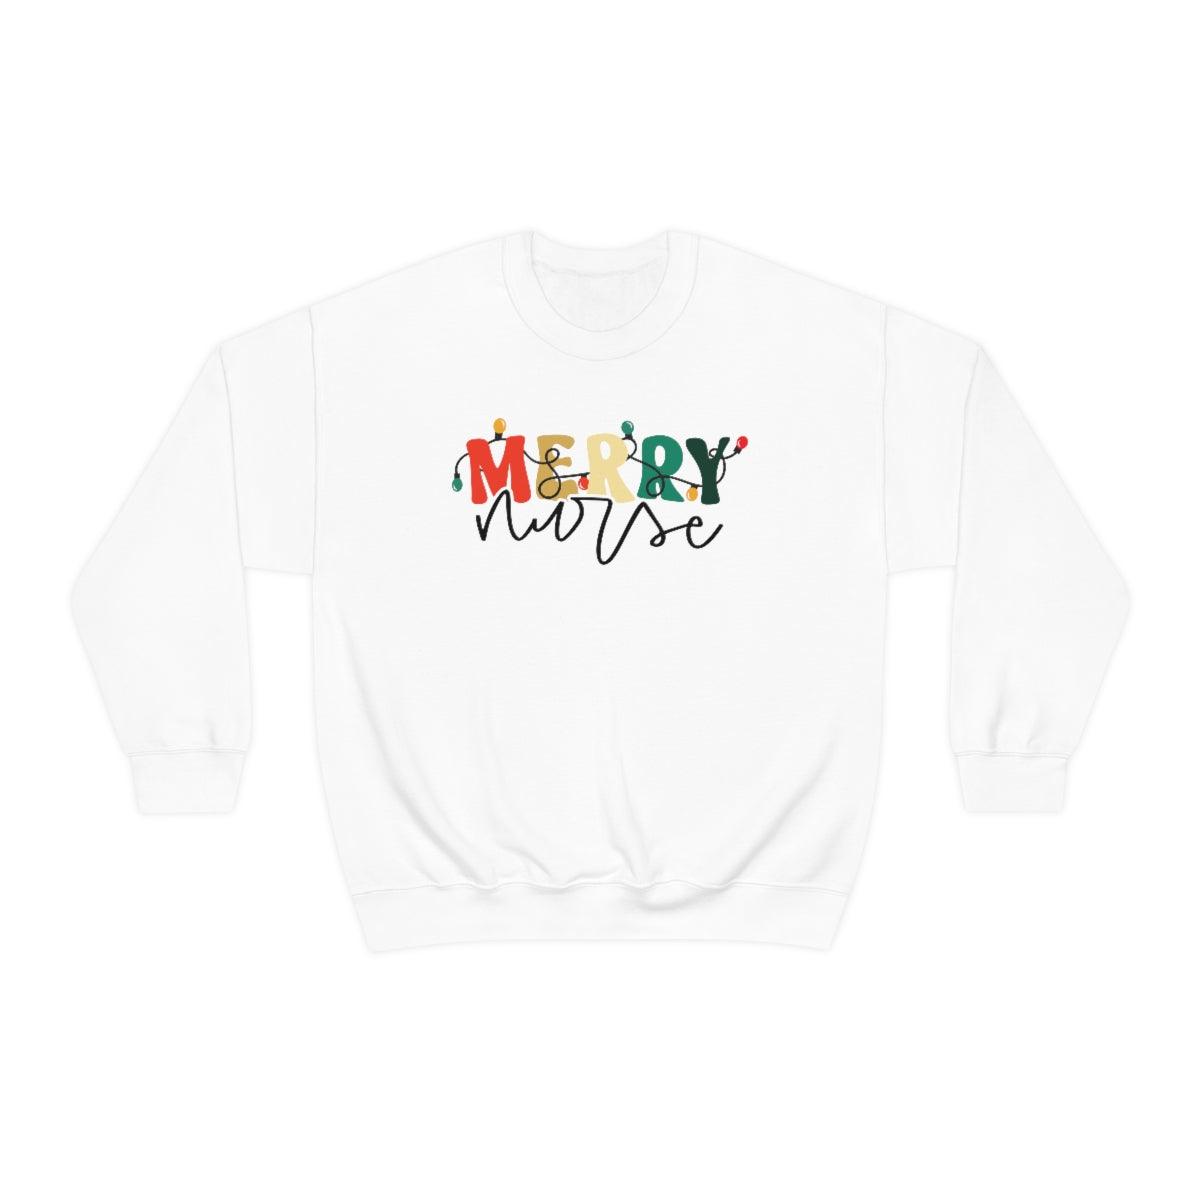 Merry Nurse Christmas Crewneck Sweater - Crystal Rose Design Co.